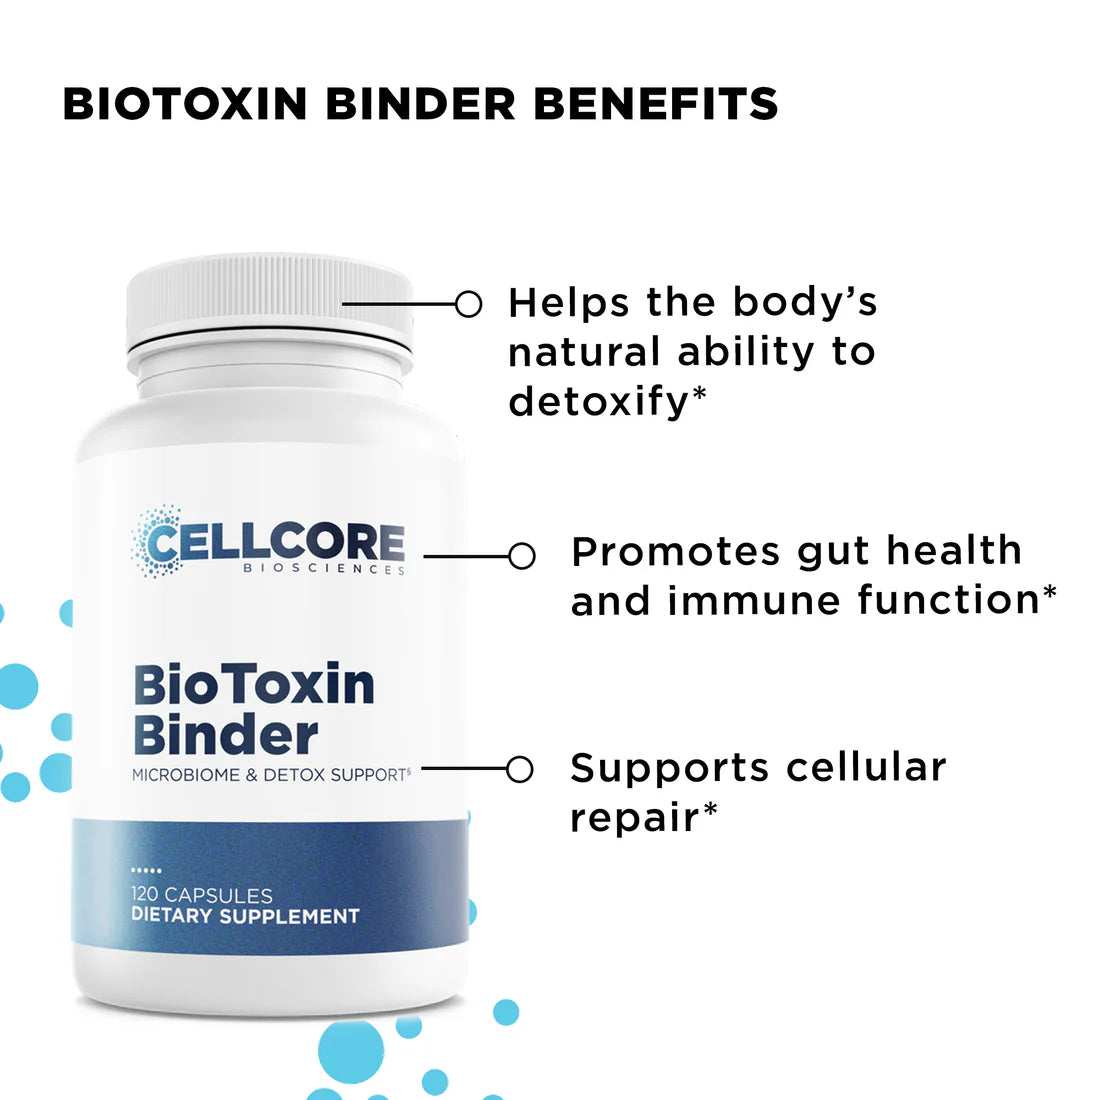 Biotoxin Binder Jumpstart Kit Cellcore Eenergy & Drainage TRS Detox